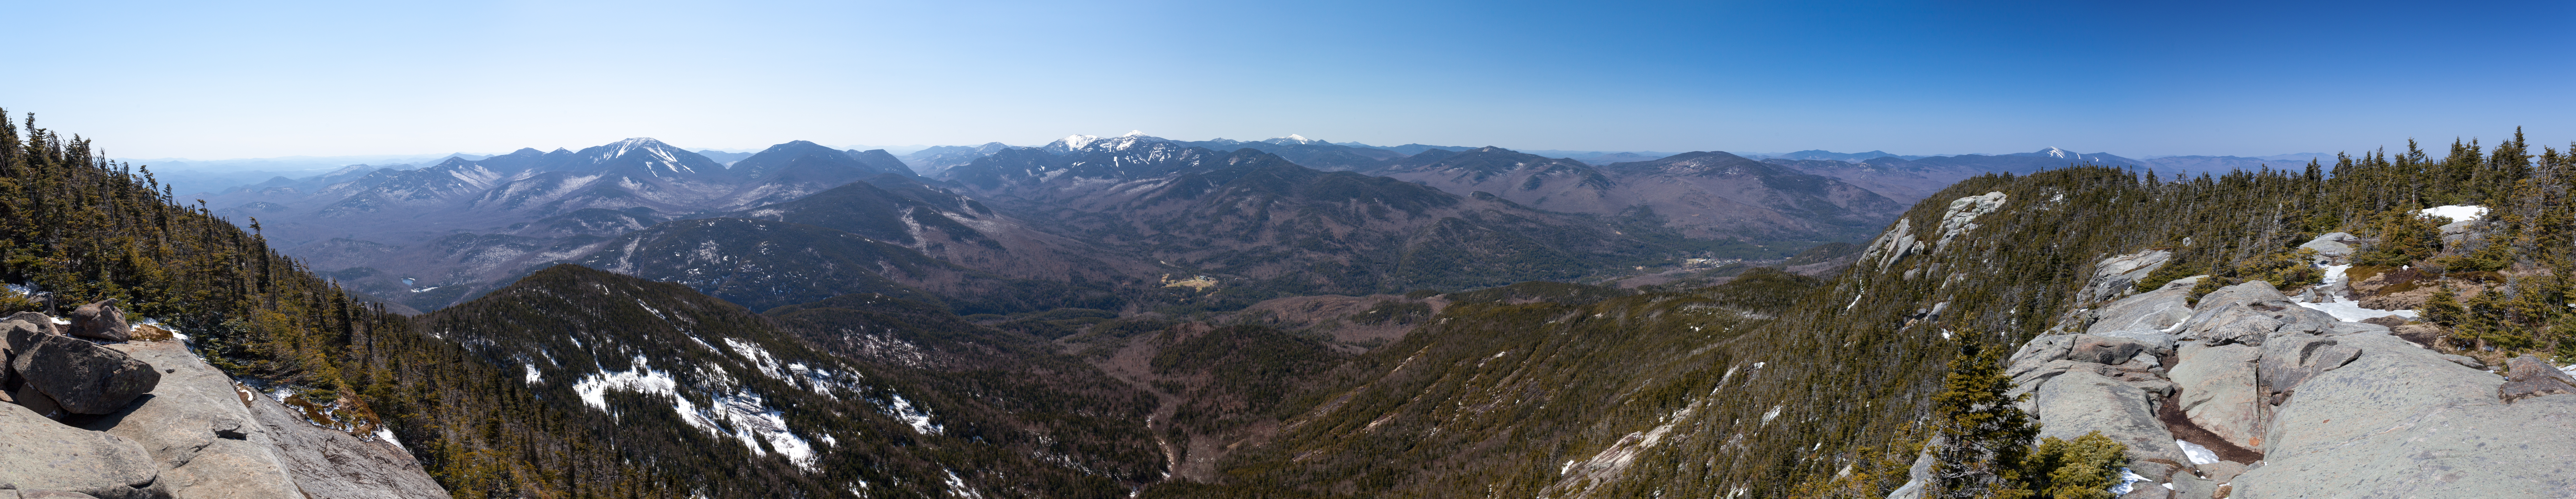 File:Giant Mountain Summit View Panorama.jpg - Wikimedia Commons